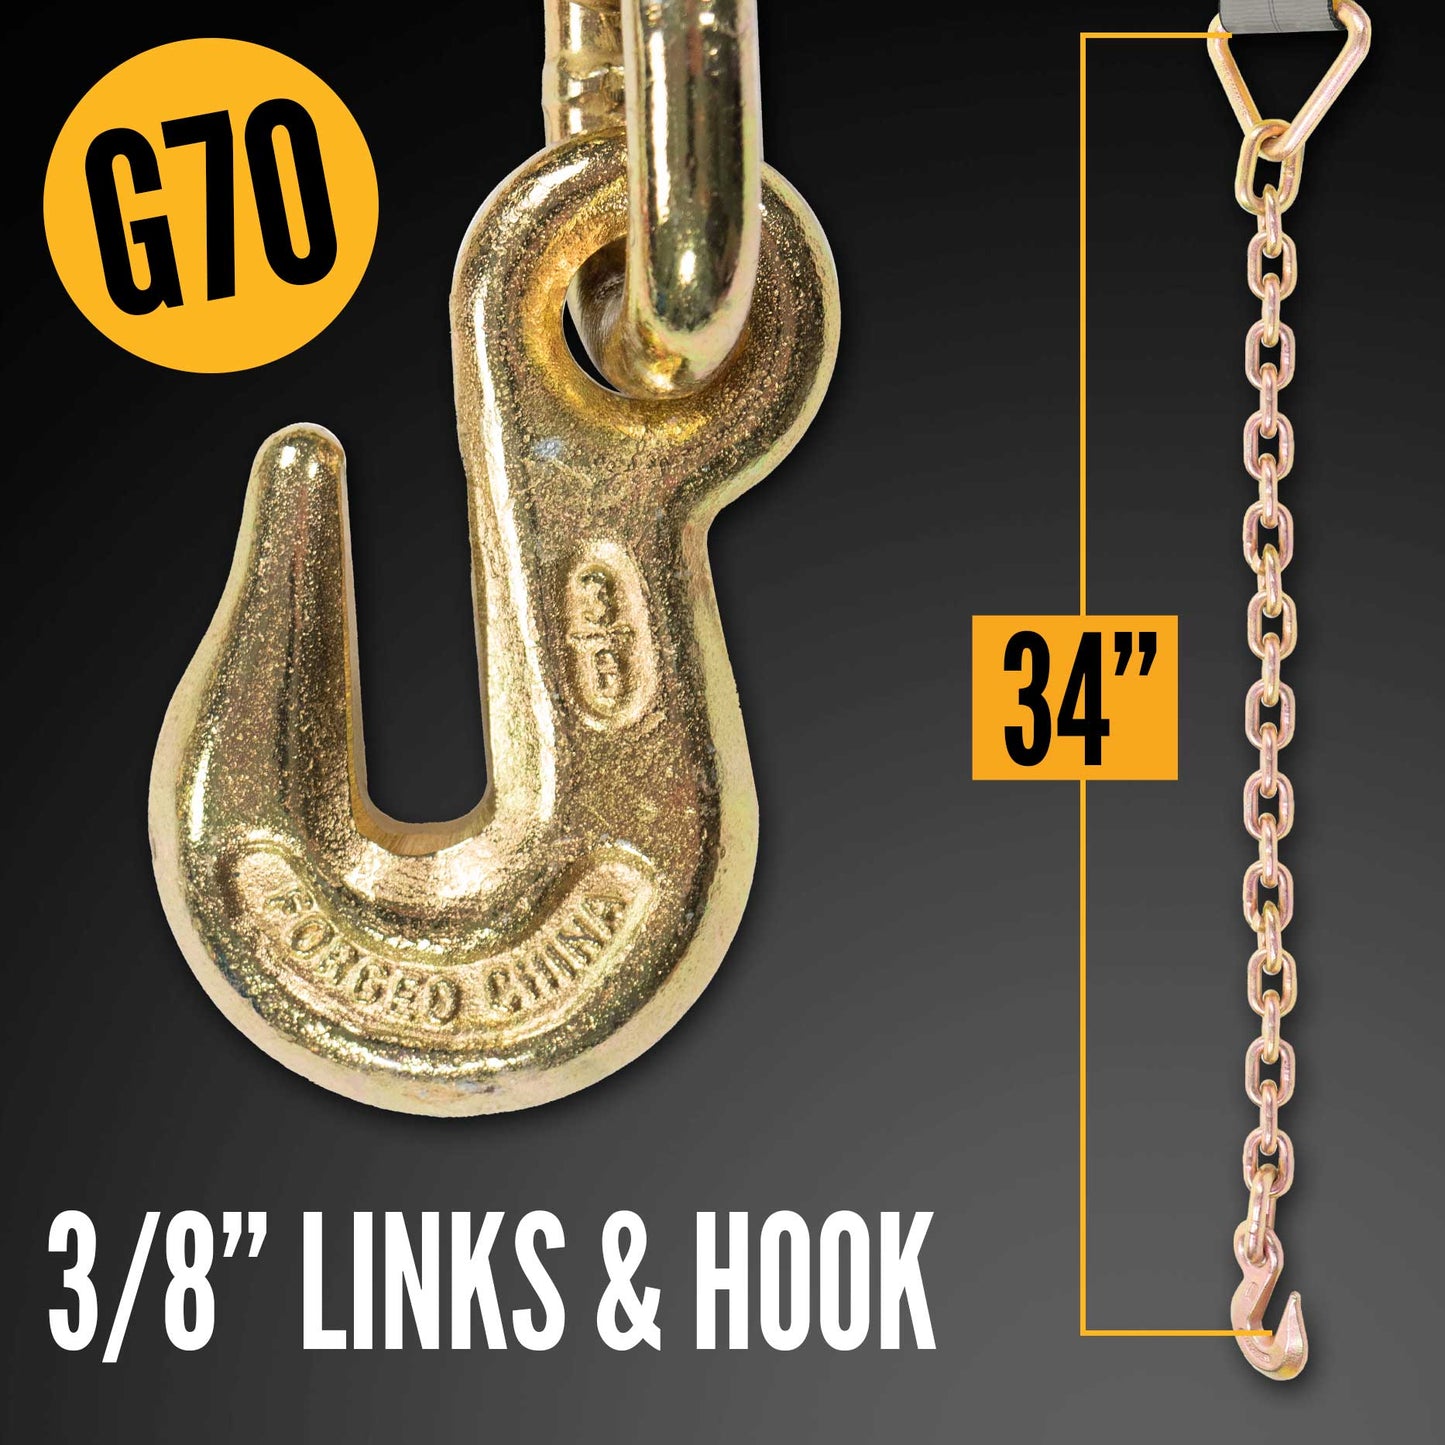 37' heavy duty BlackLine 34" grade 70 chain end with 3/8" grab hook